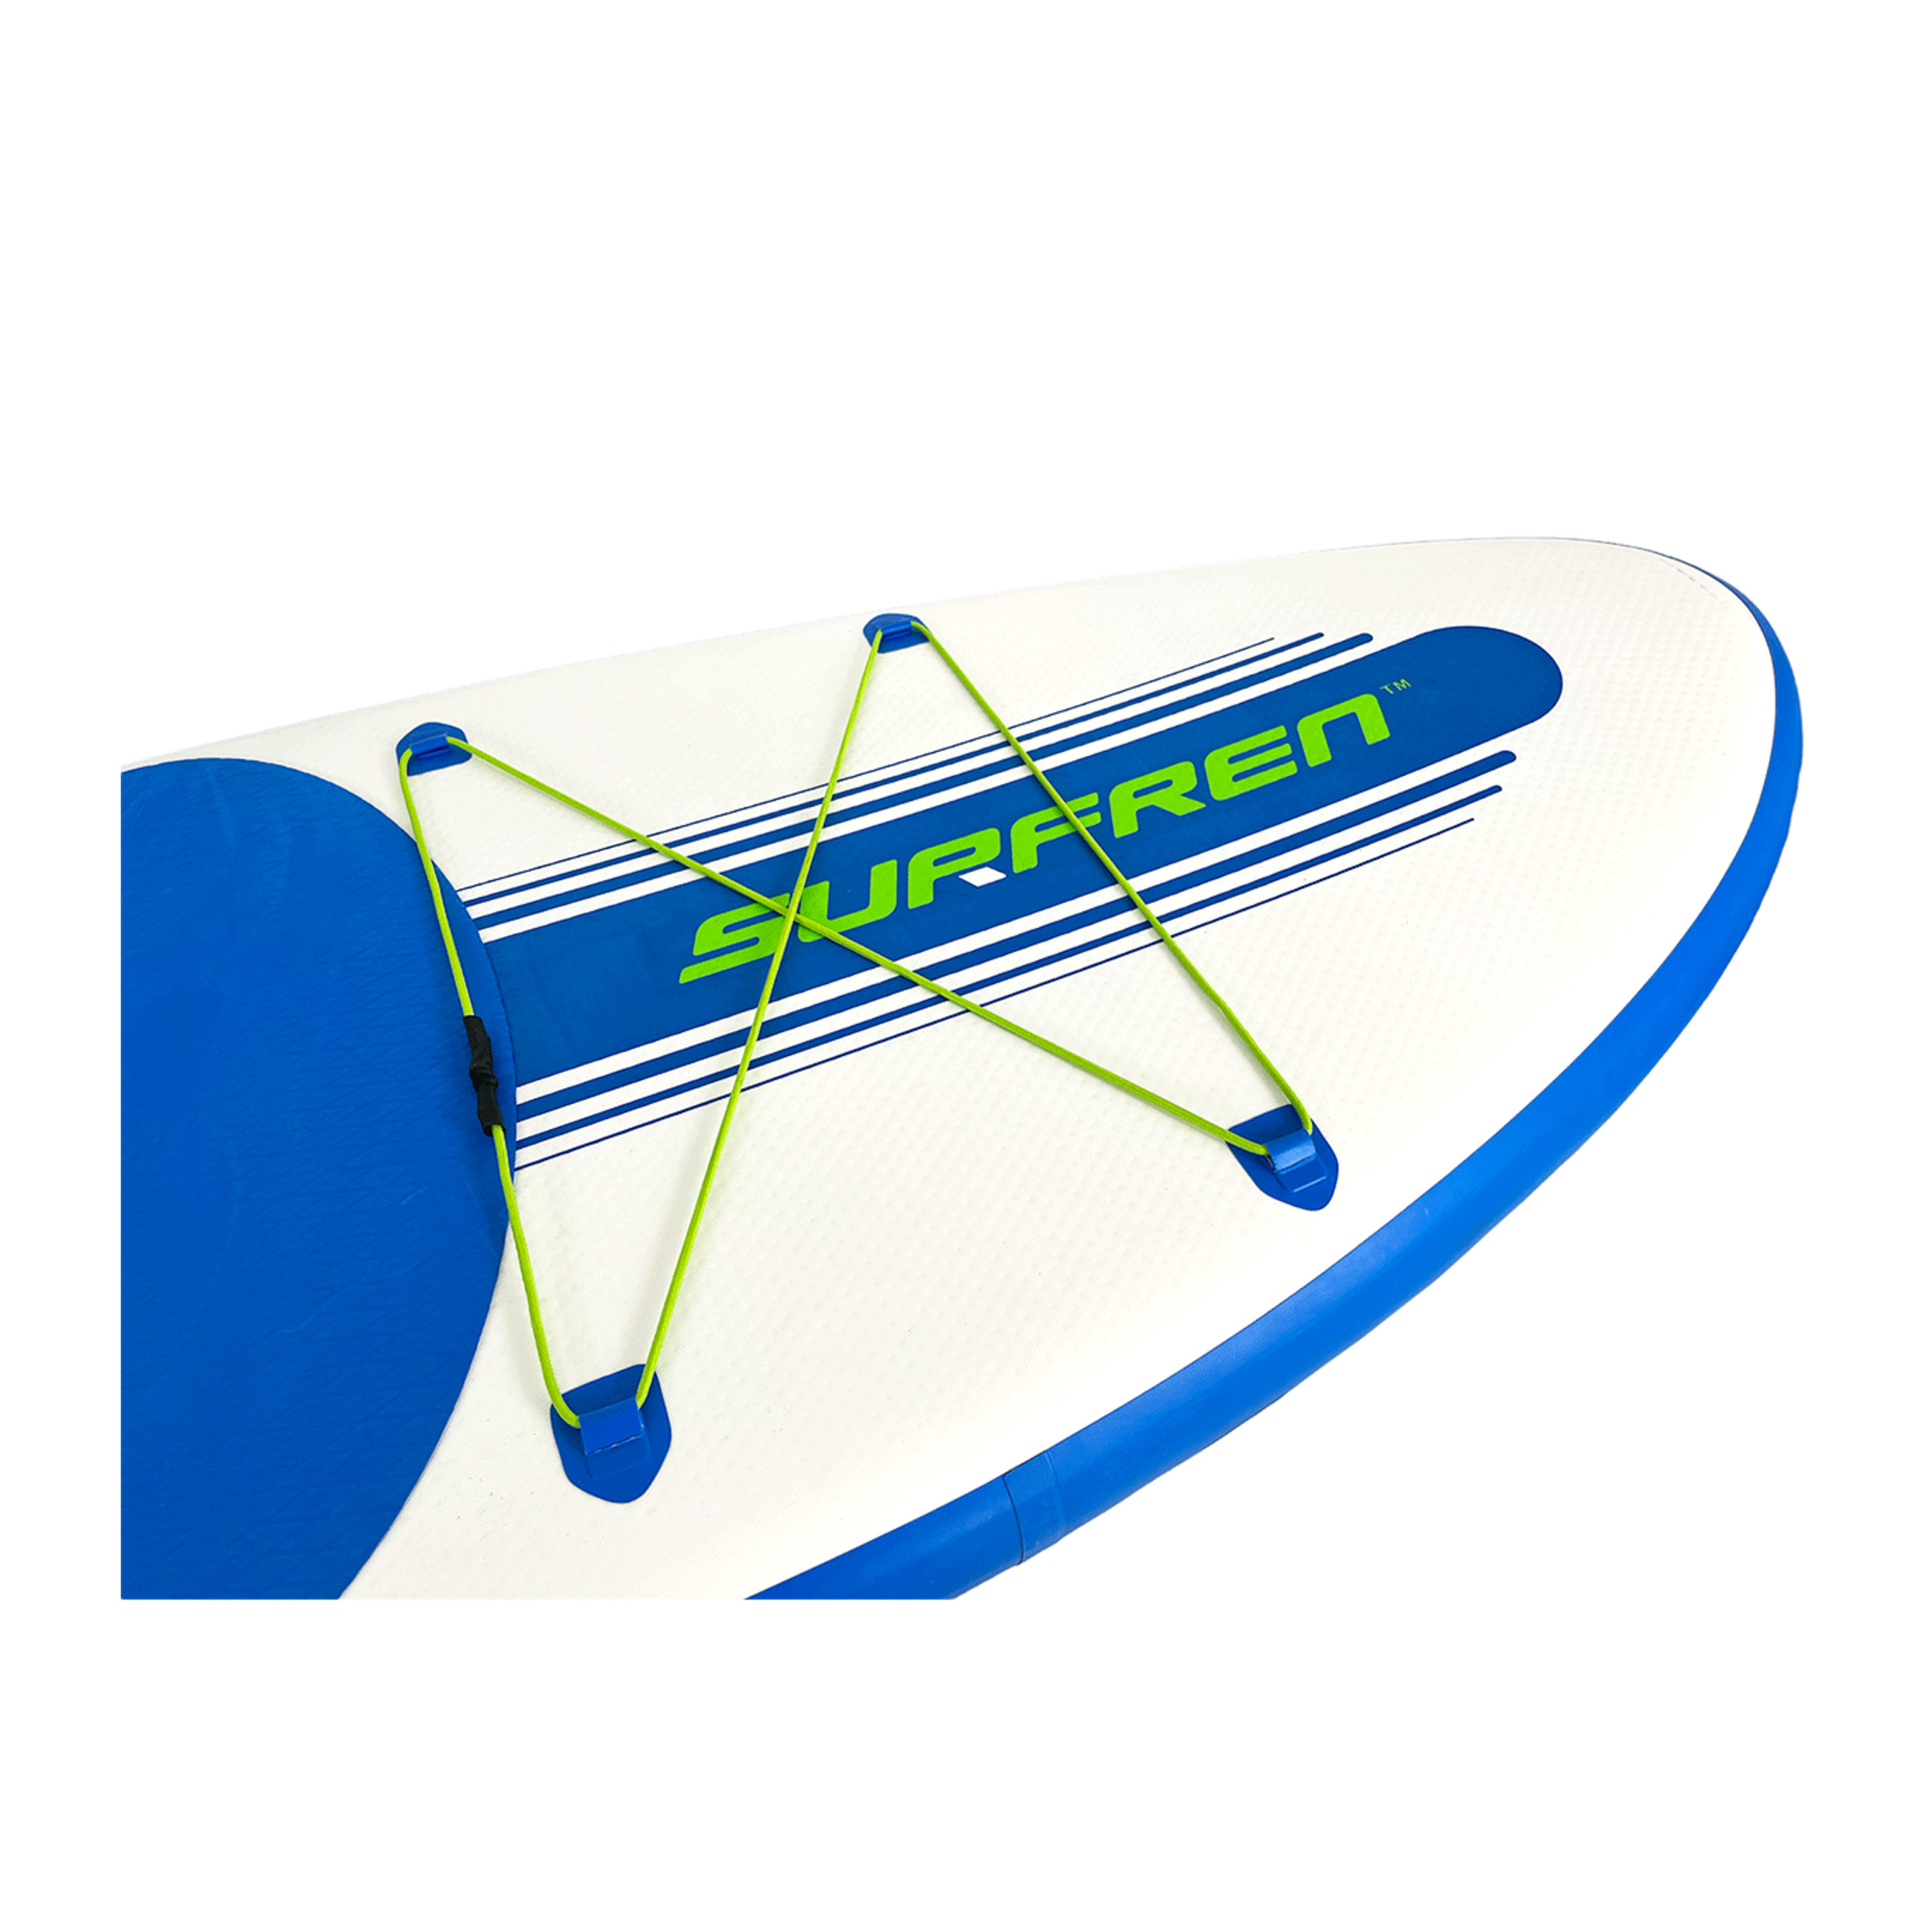 Tabla Paddle Surf Hinchable Surfren S3 12'0"(365 Cm) - Verde/Azul Oscuro - Tabla Paddle Surf S3 Hinchable  MKP